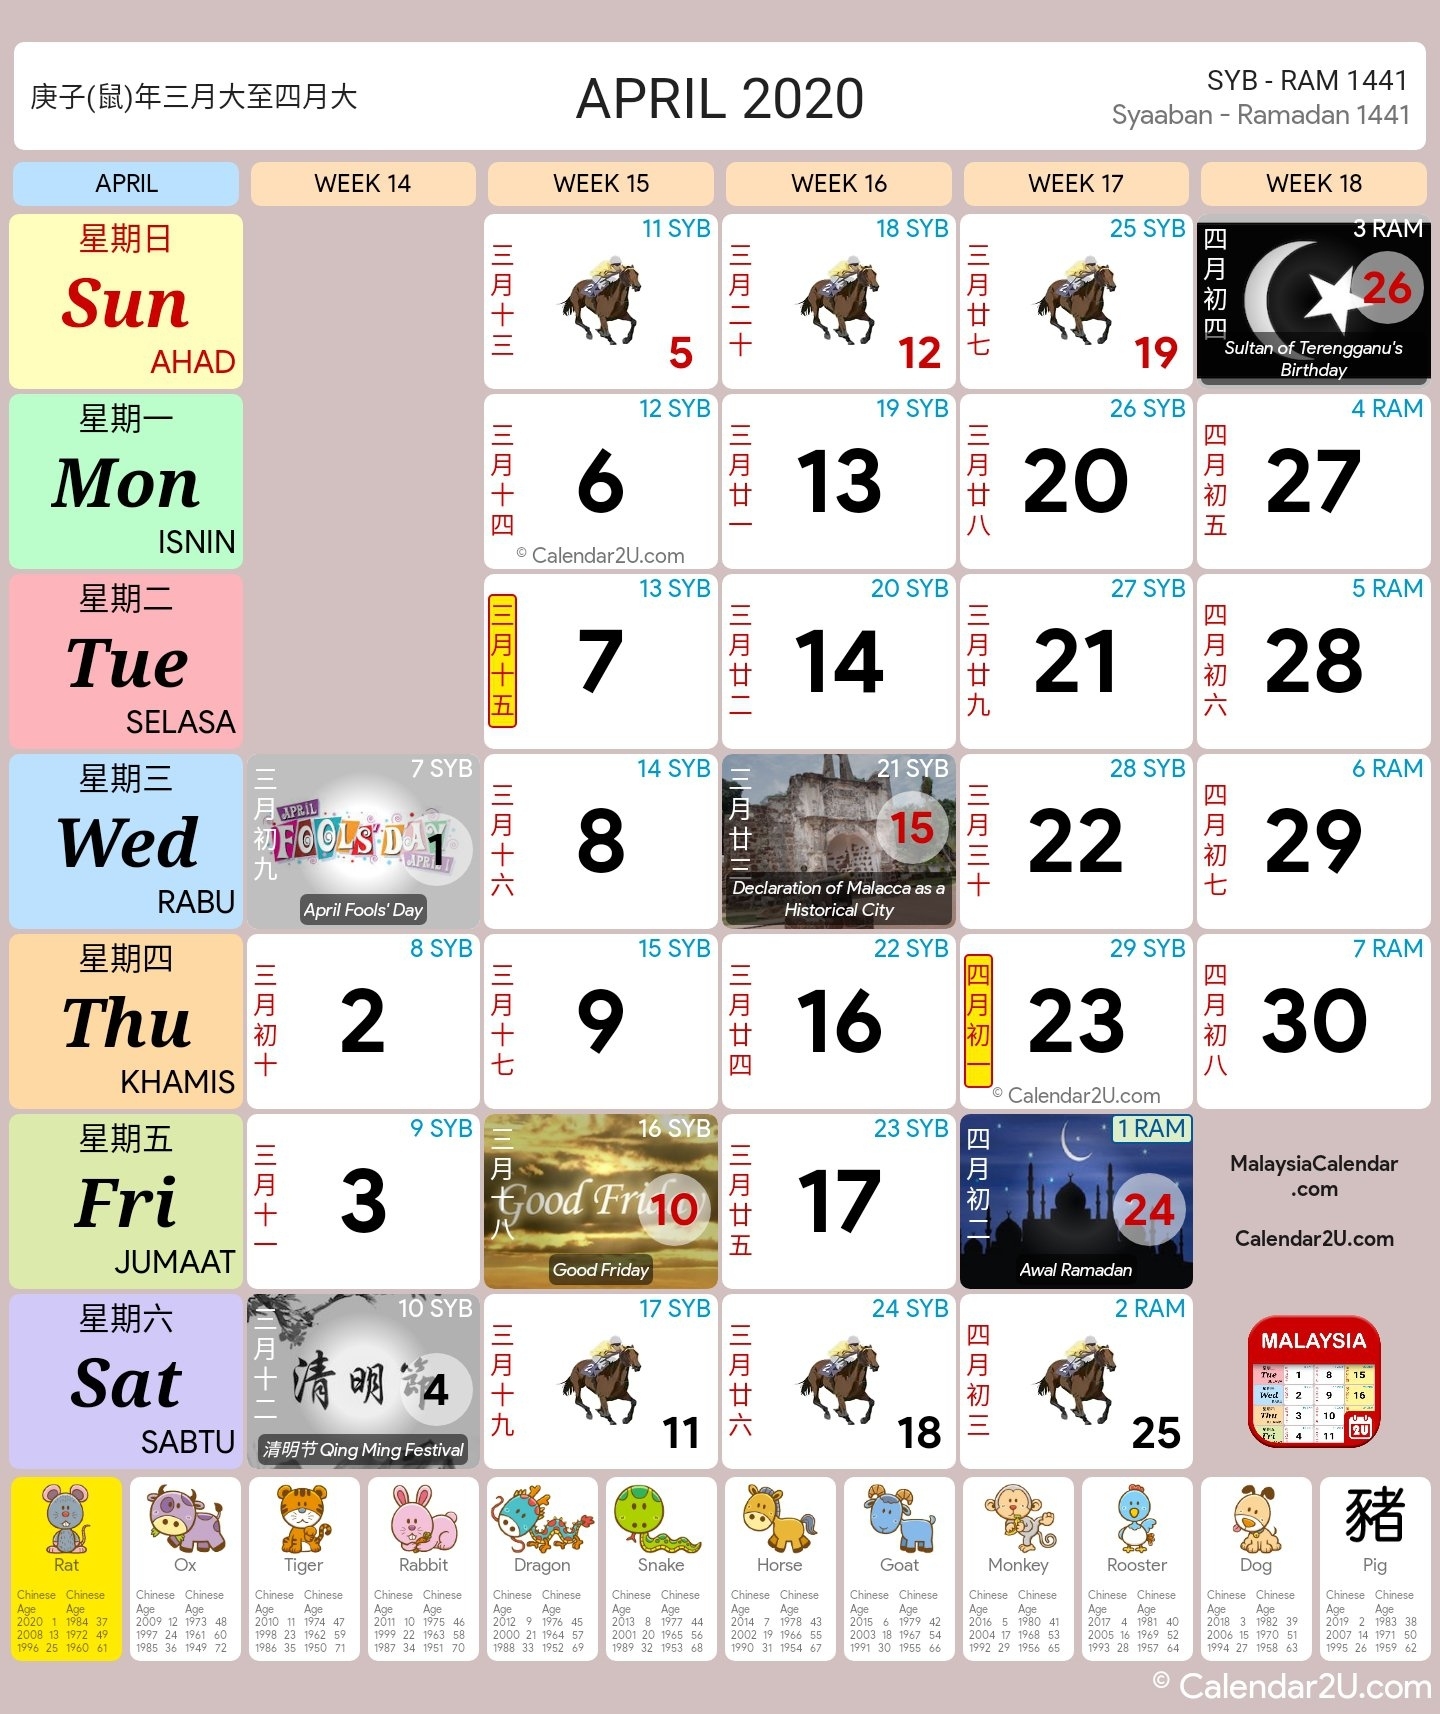 Malaysia Calendar Year 2020 (School Holiday) - Malaysia Calendar Malaysia Calendar 2020 Include School Holiday